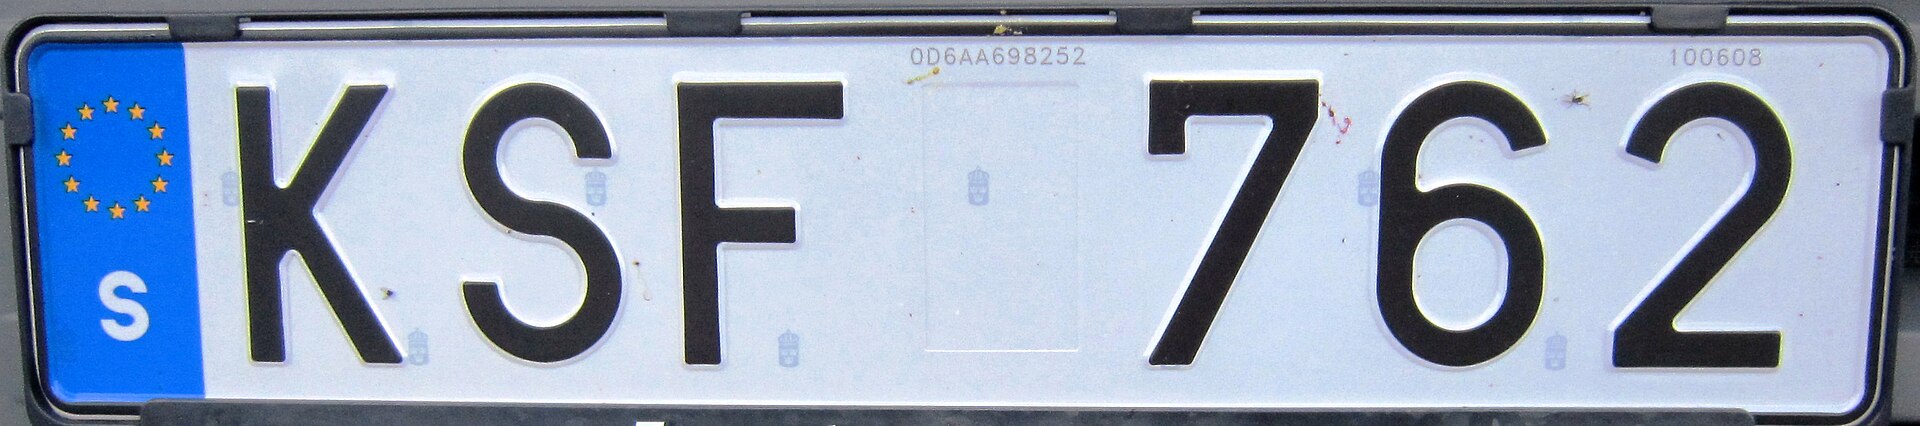 1920px-Sweden_licenseplate_EU.JPG